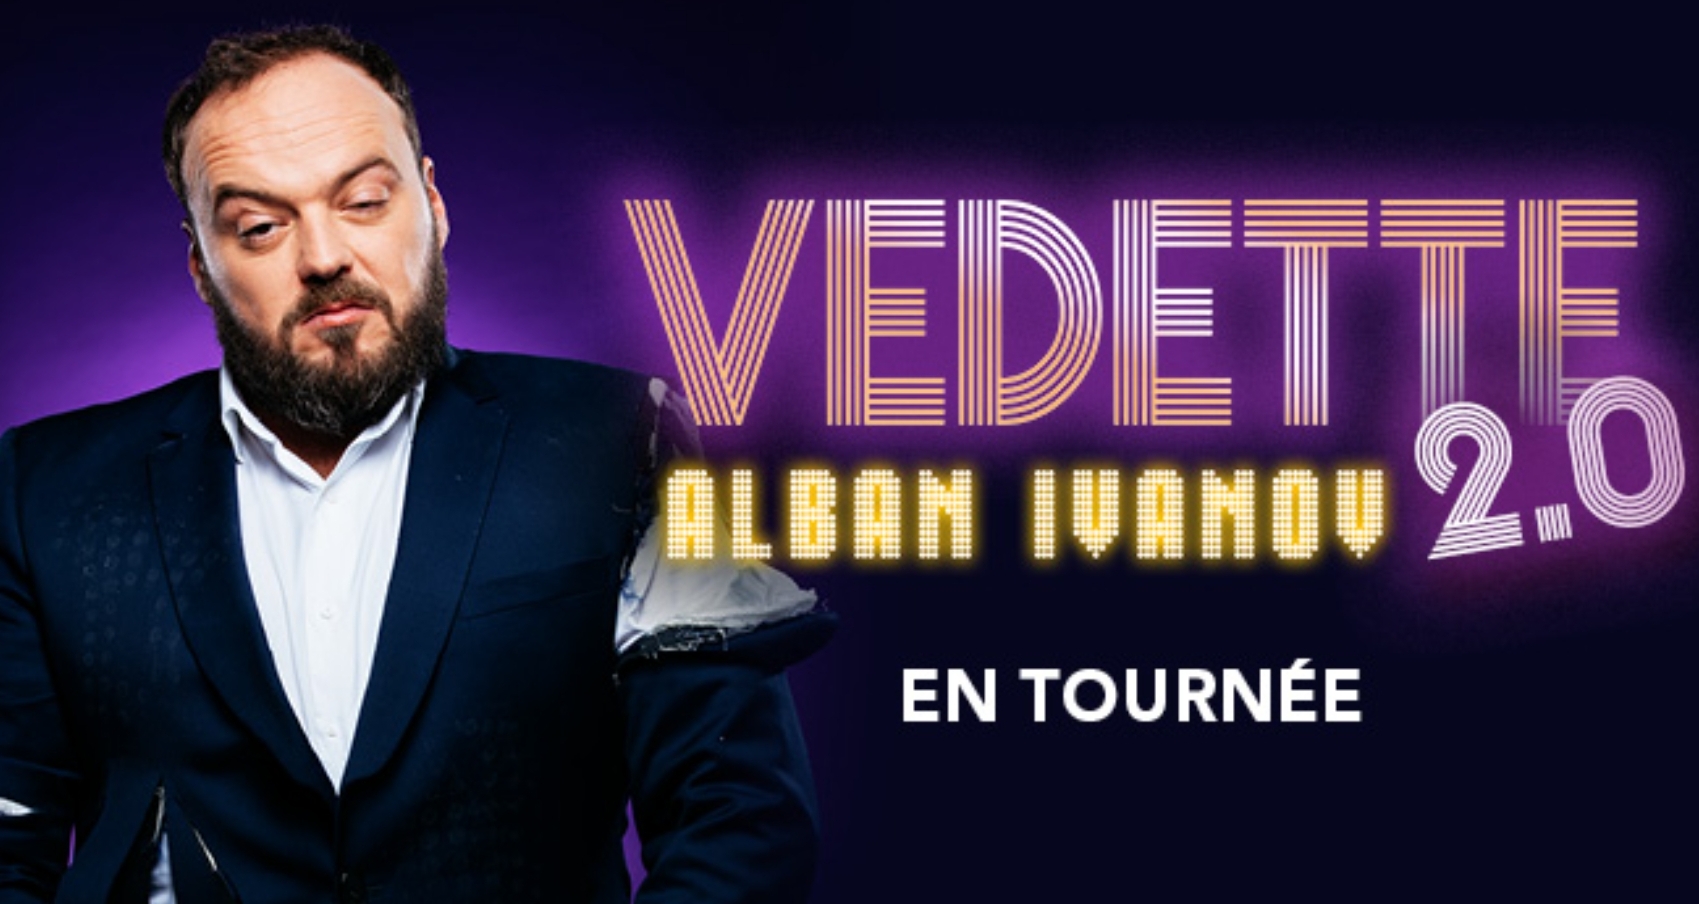 Alban Ivanov - Vedette 2.0 at Parc des Expositions Tours Tickets